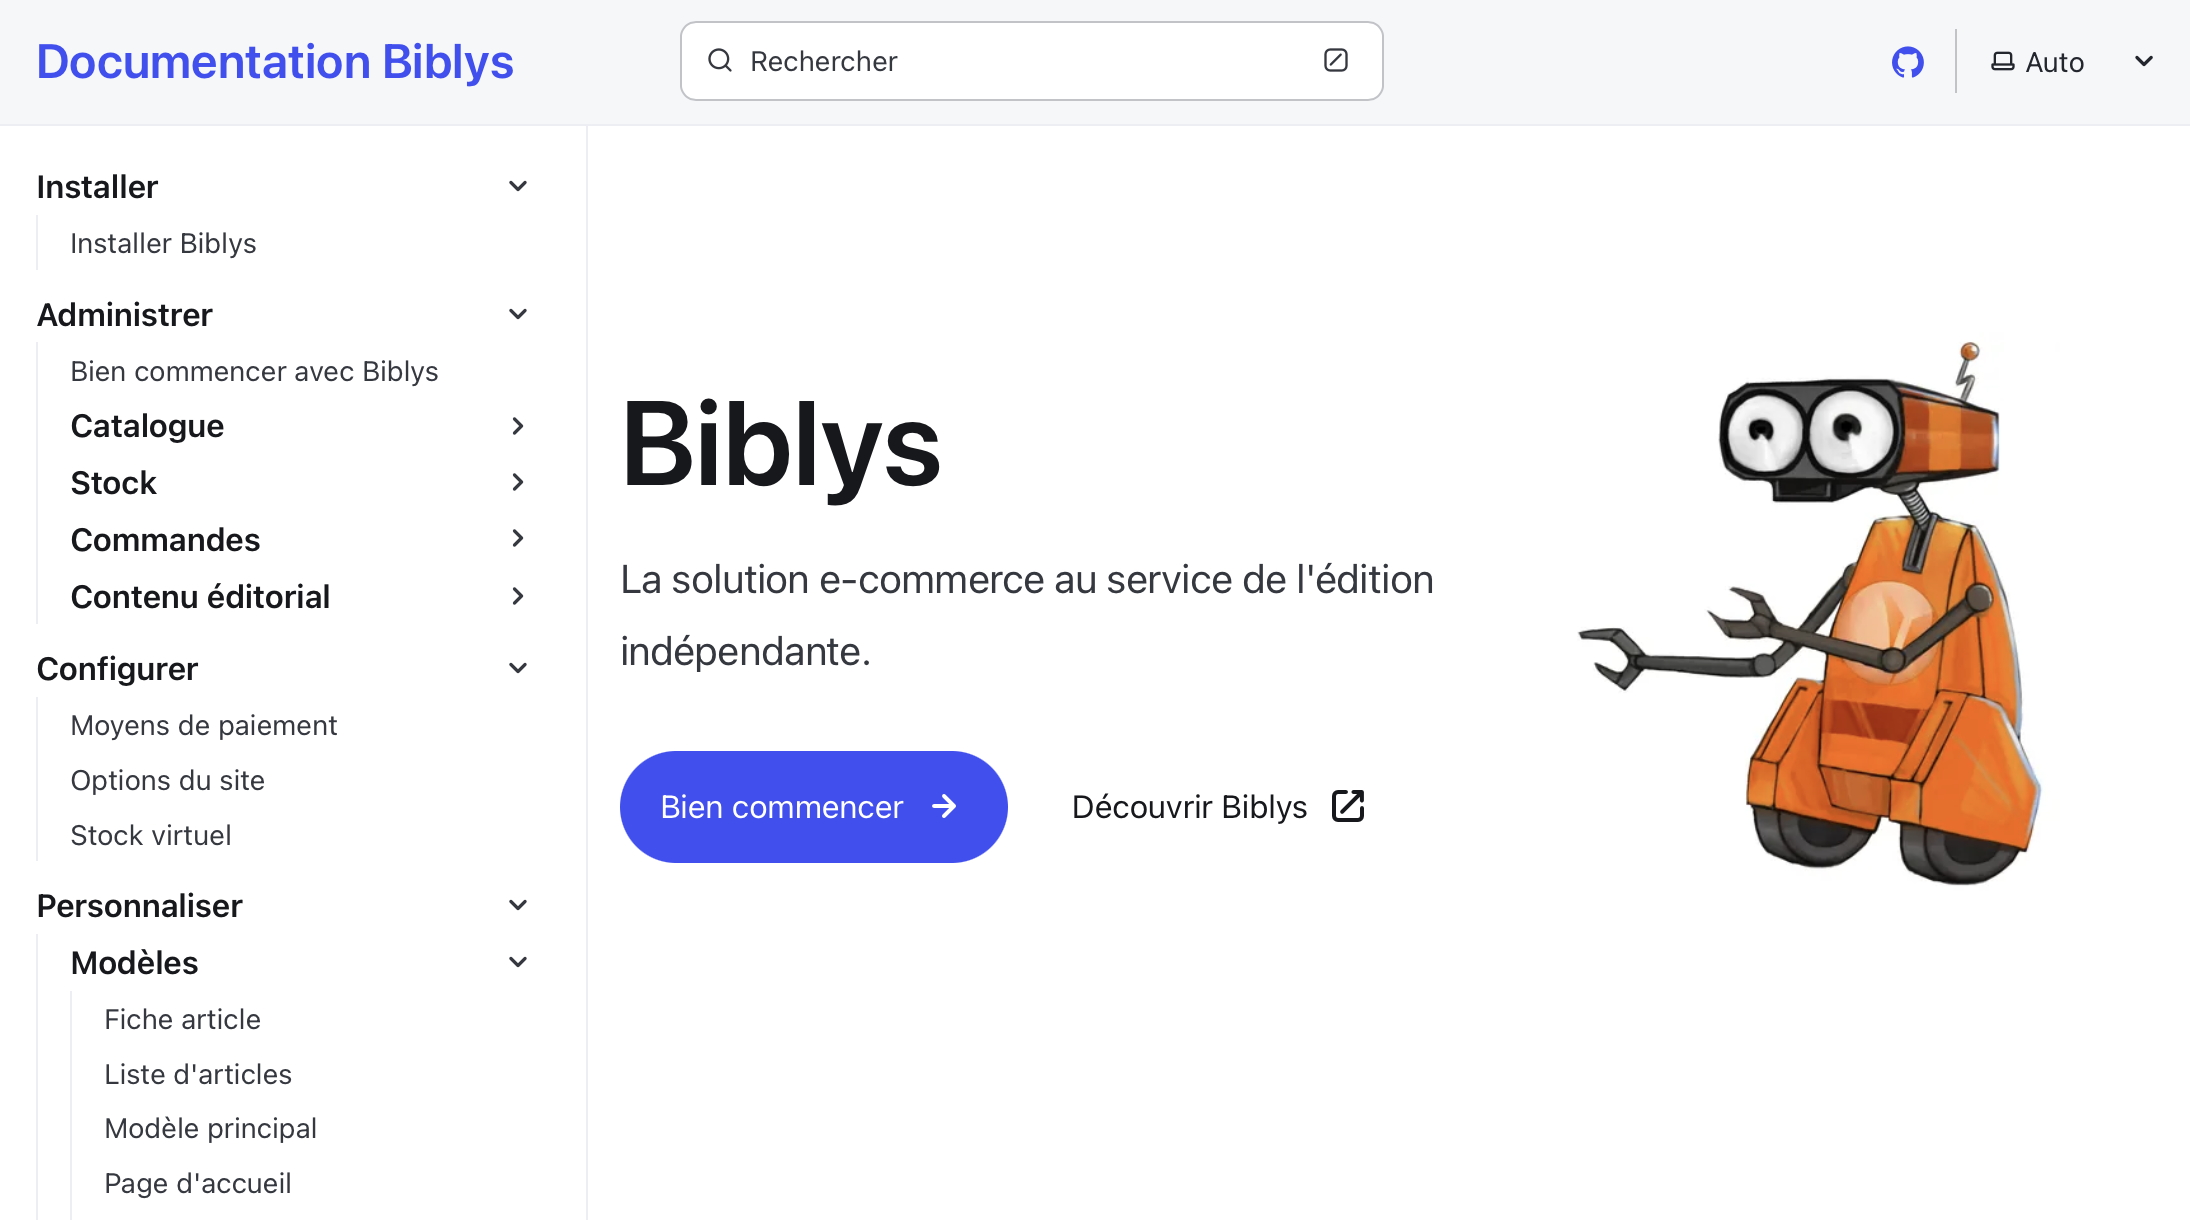 Le site de documentation Biblys